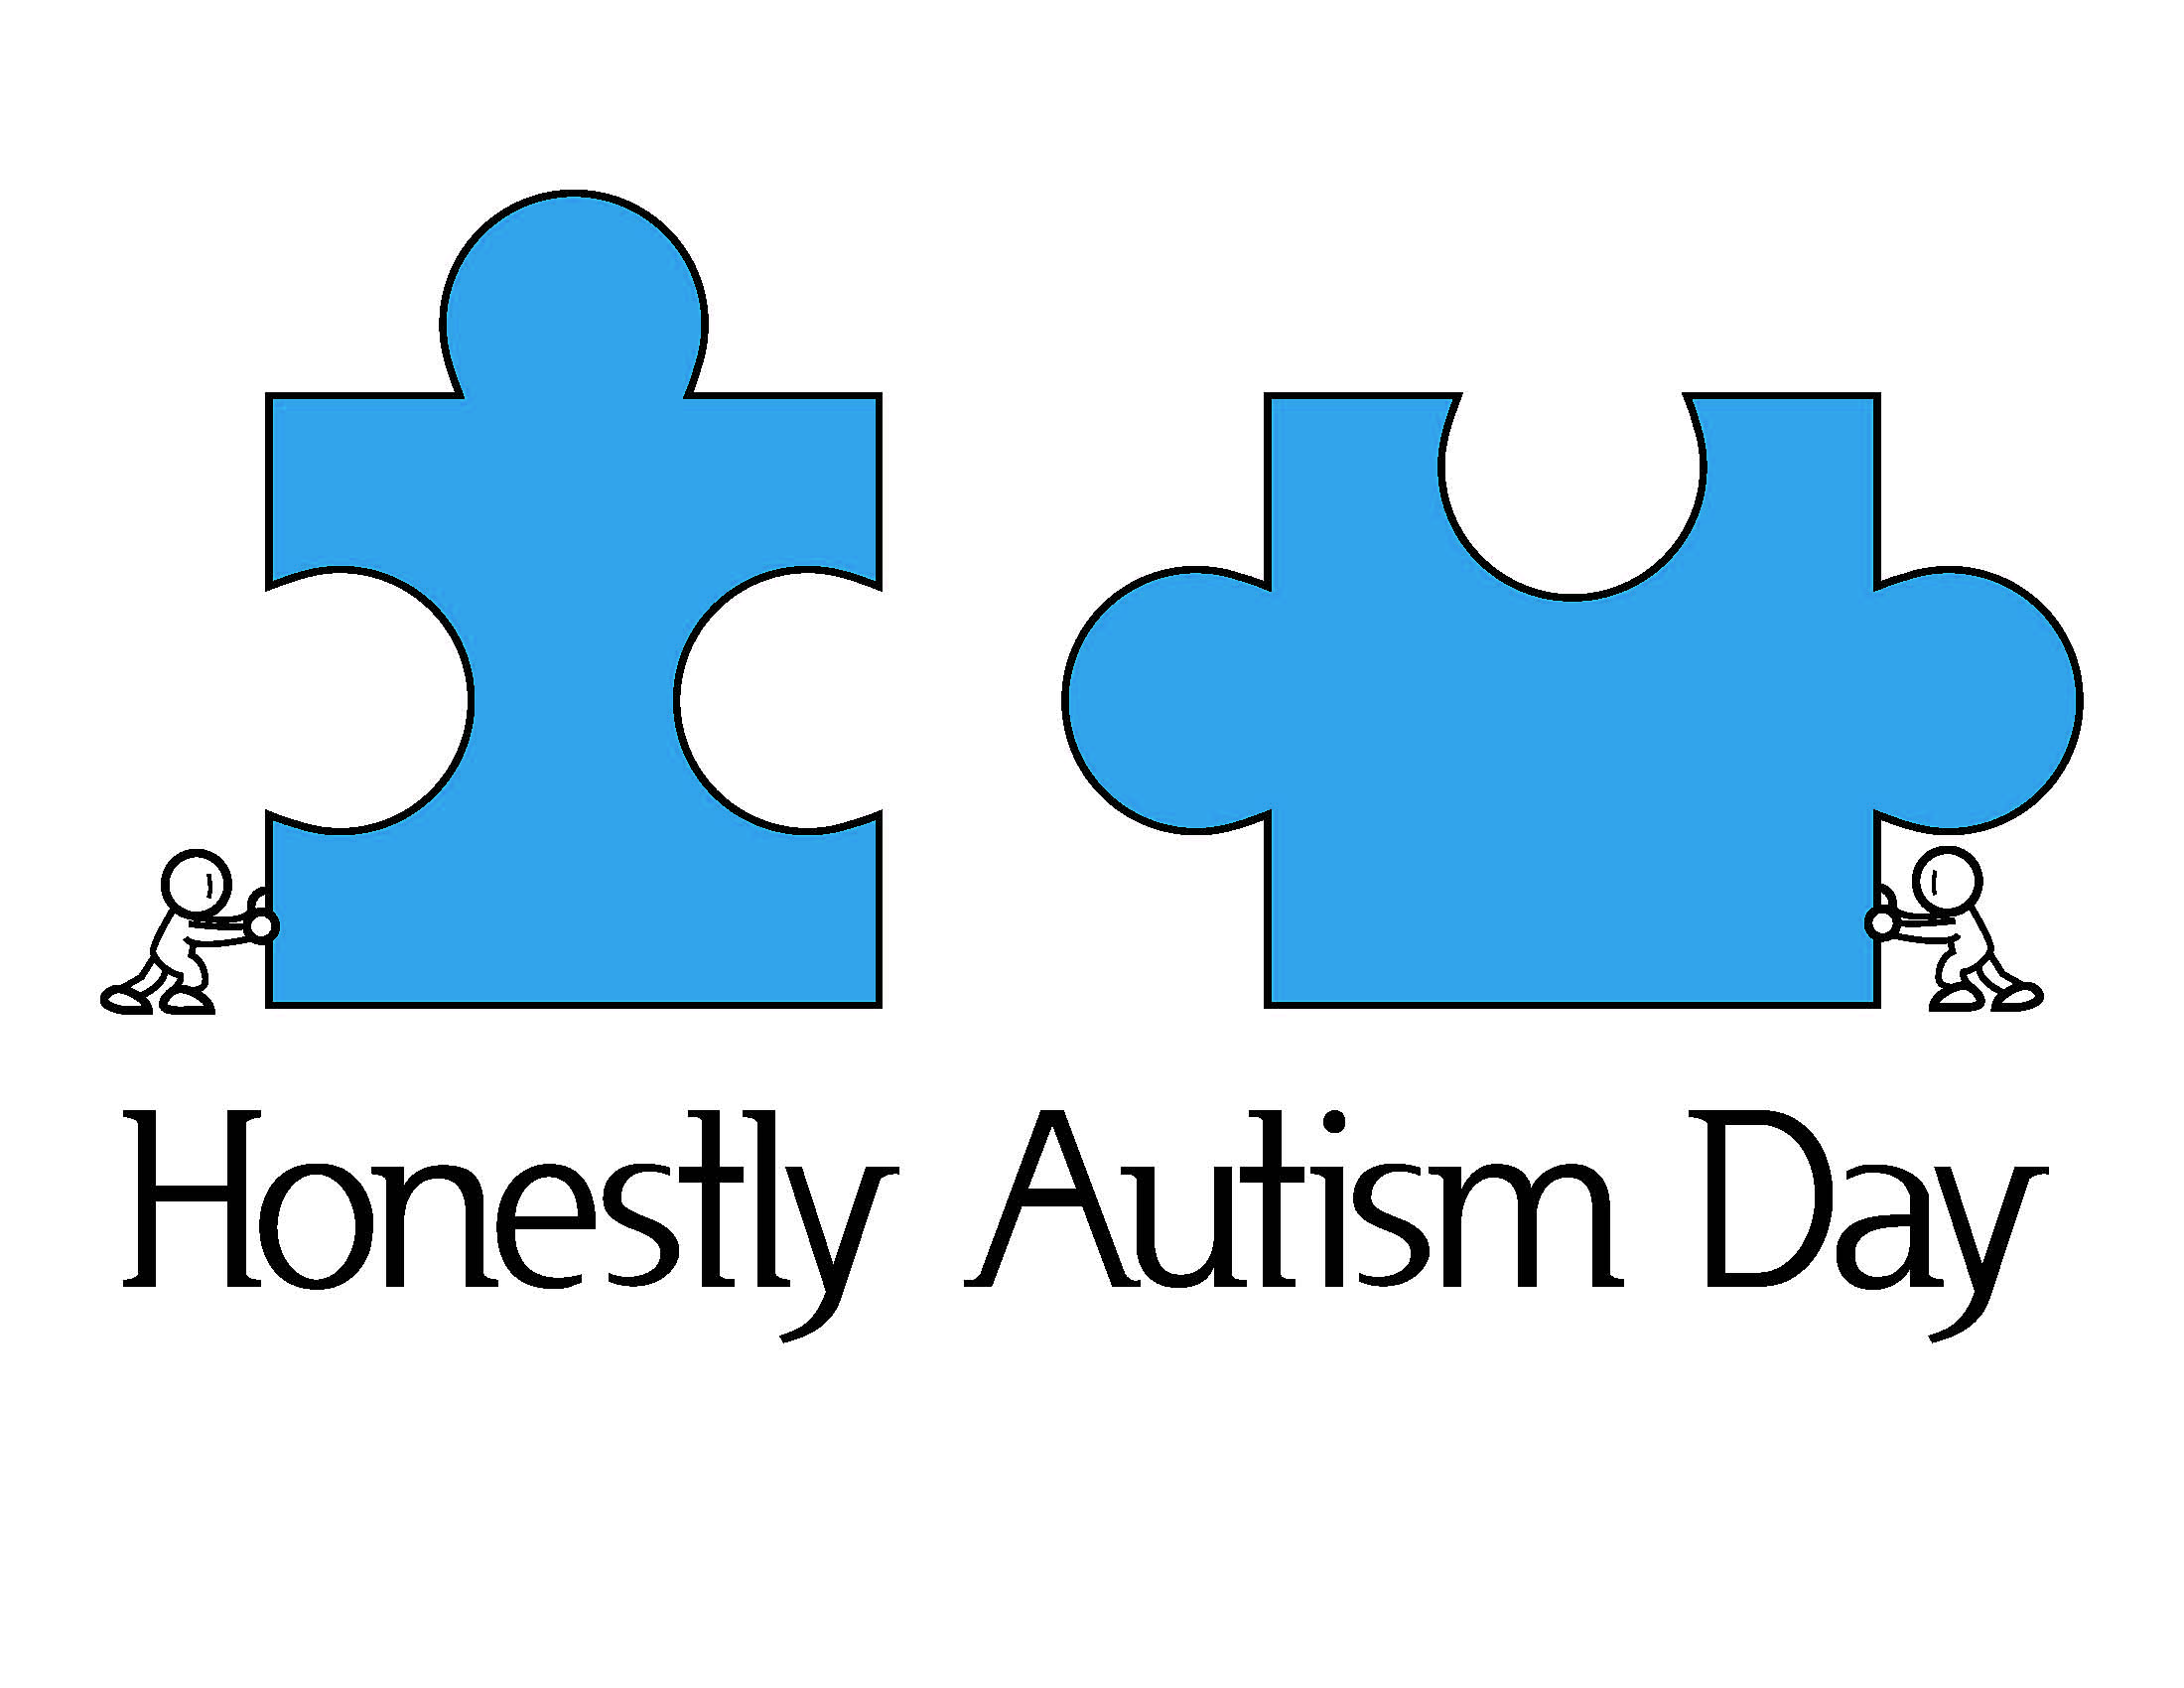 Autism awareness essay contest winners maryland